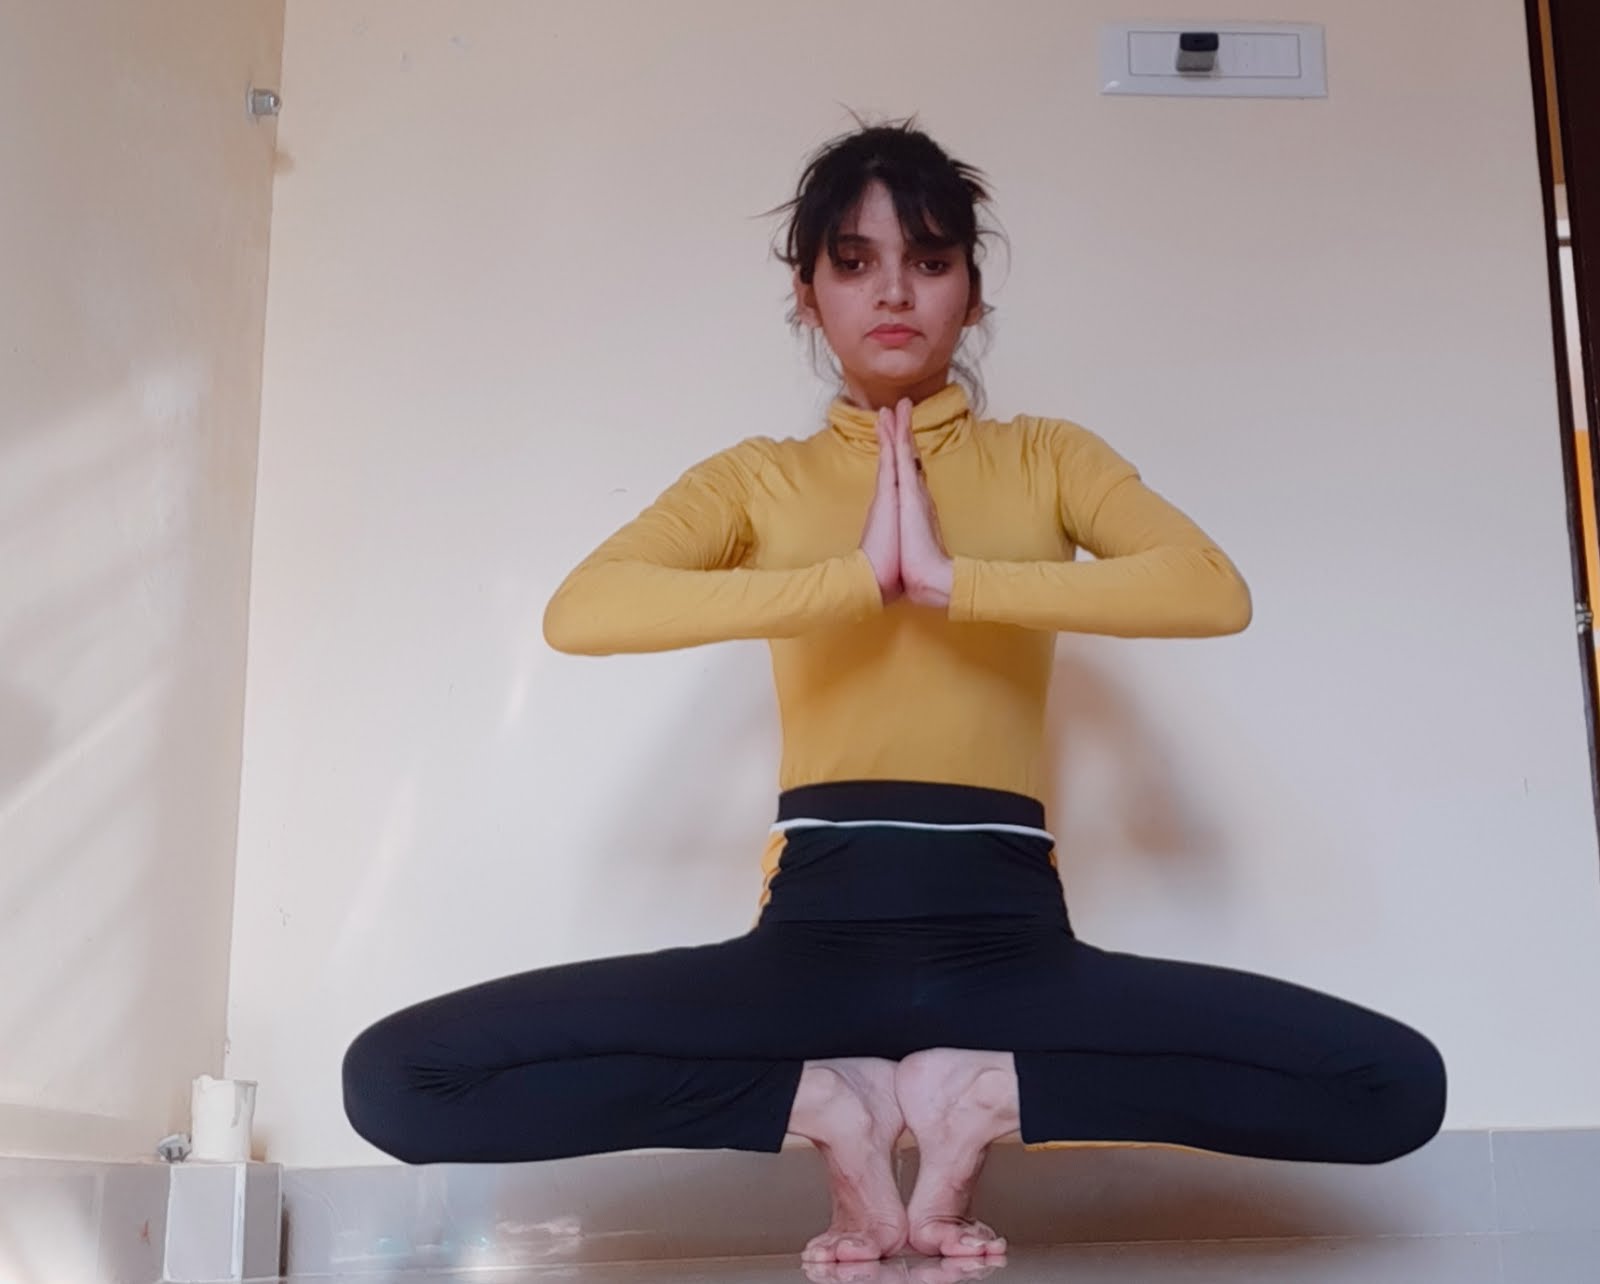 Yoga Pose "Asana"